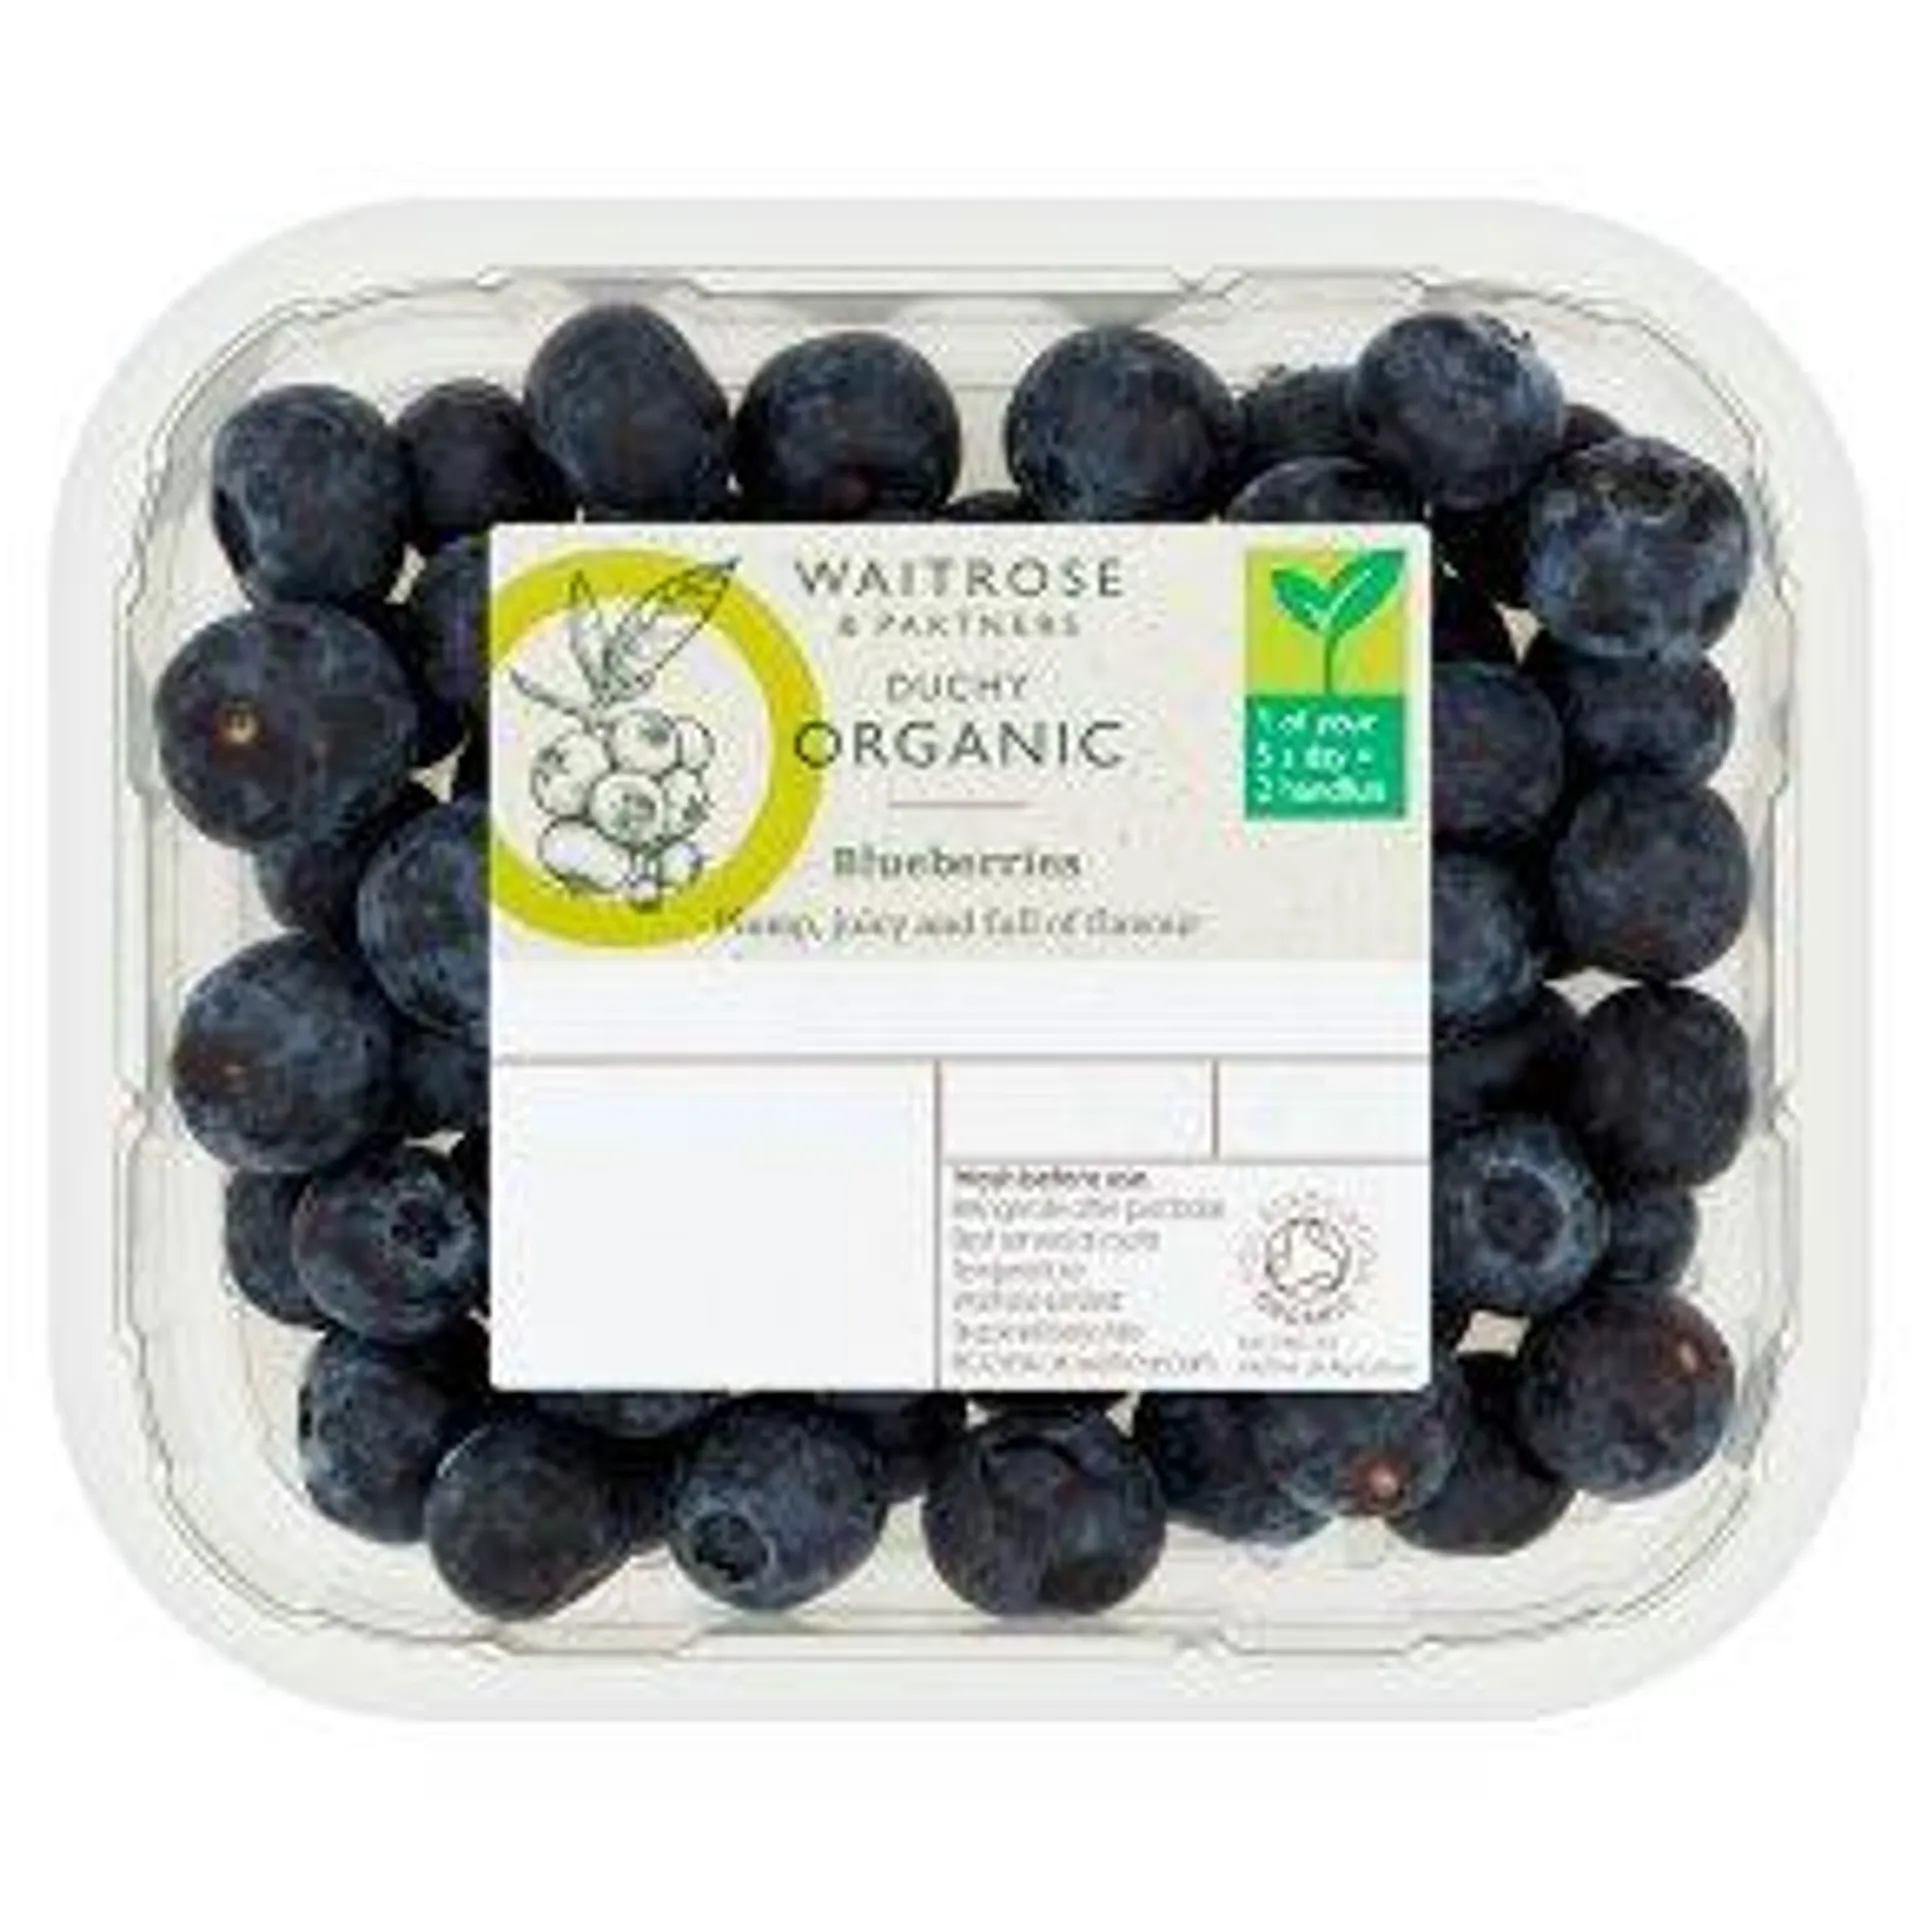 Duchy Organic Blueberries